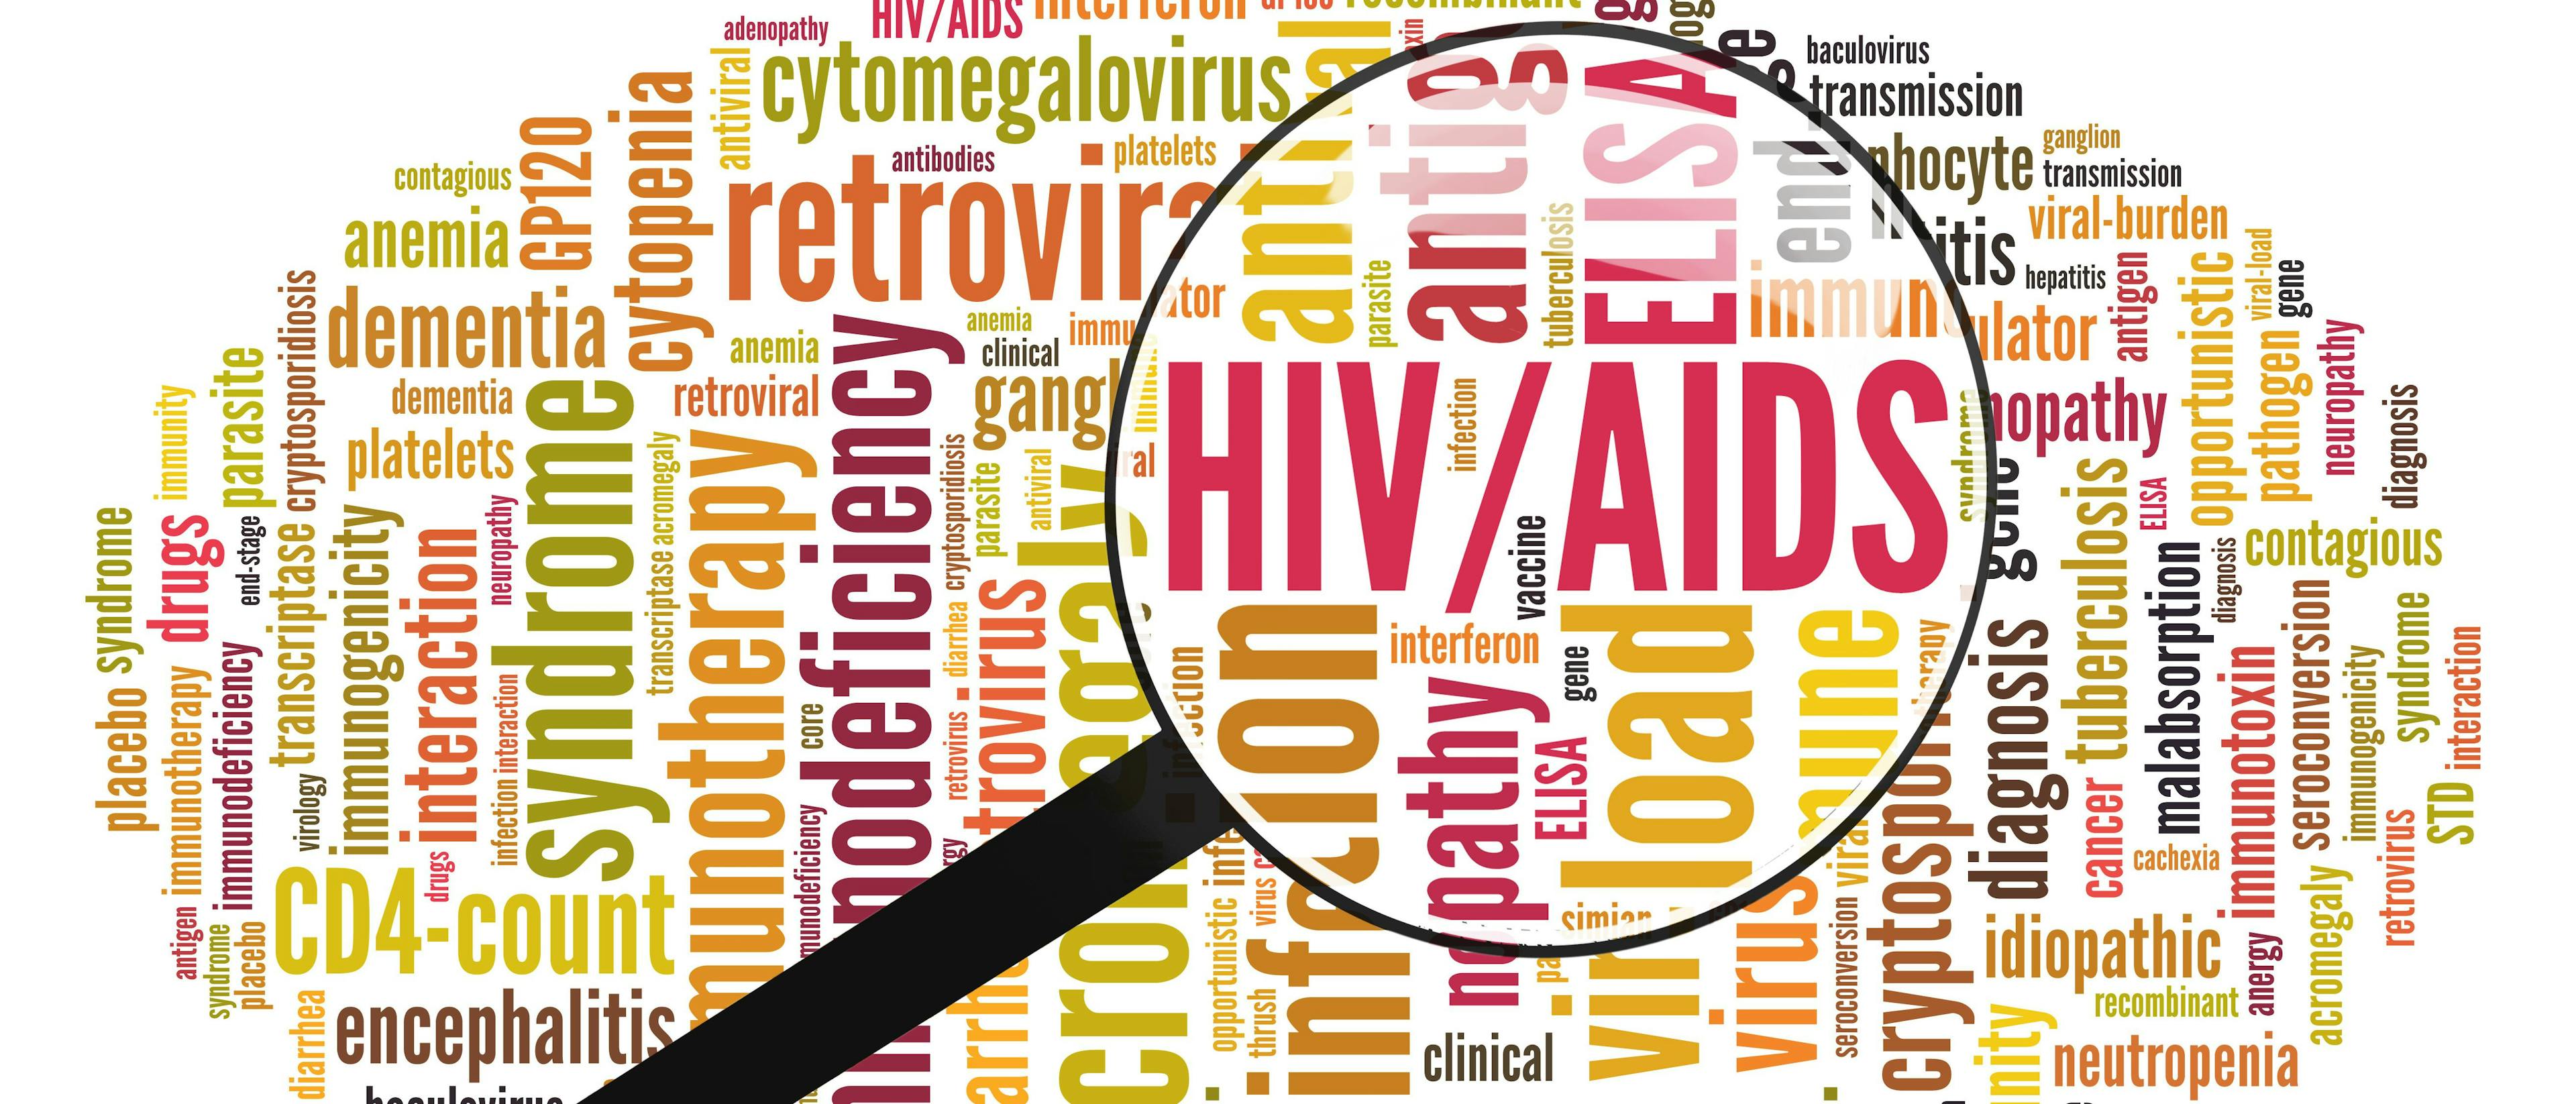 Pharmacy Students' Attitudes Toward HIV-Positive Patients